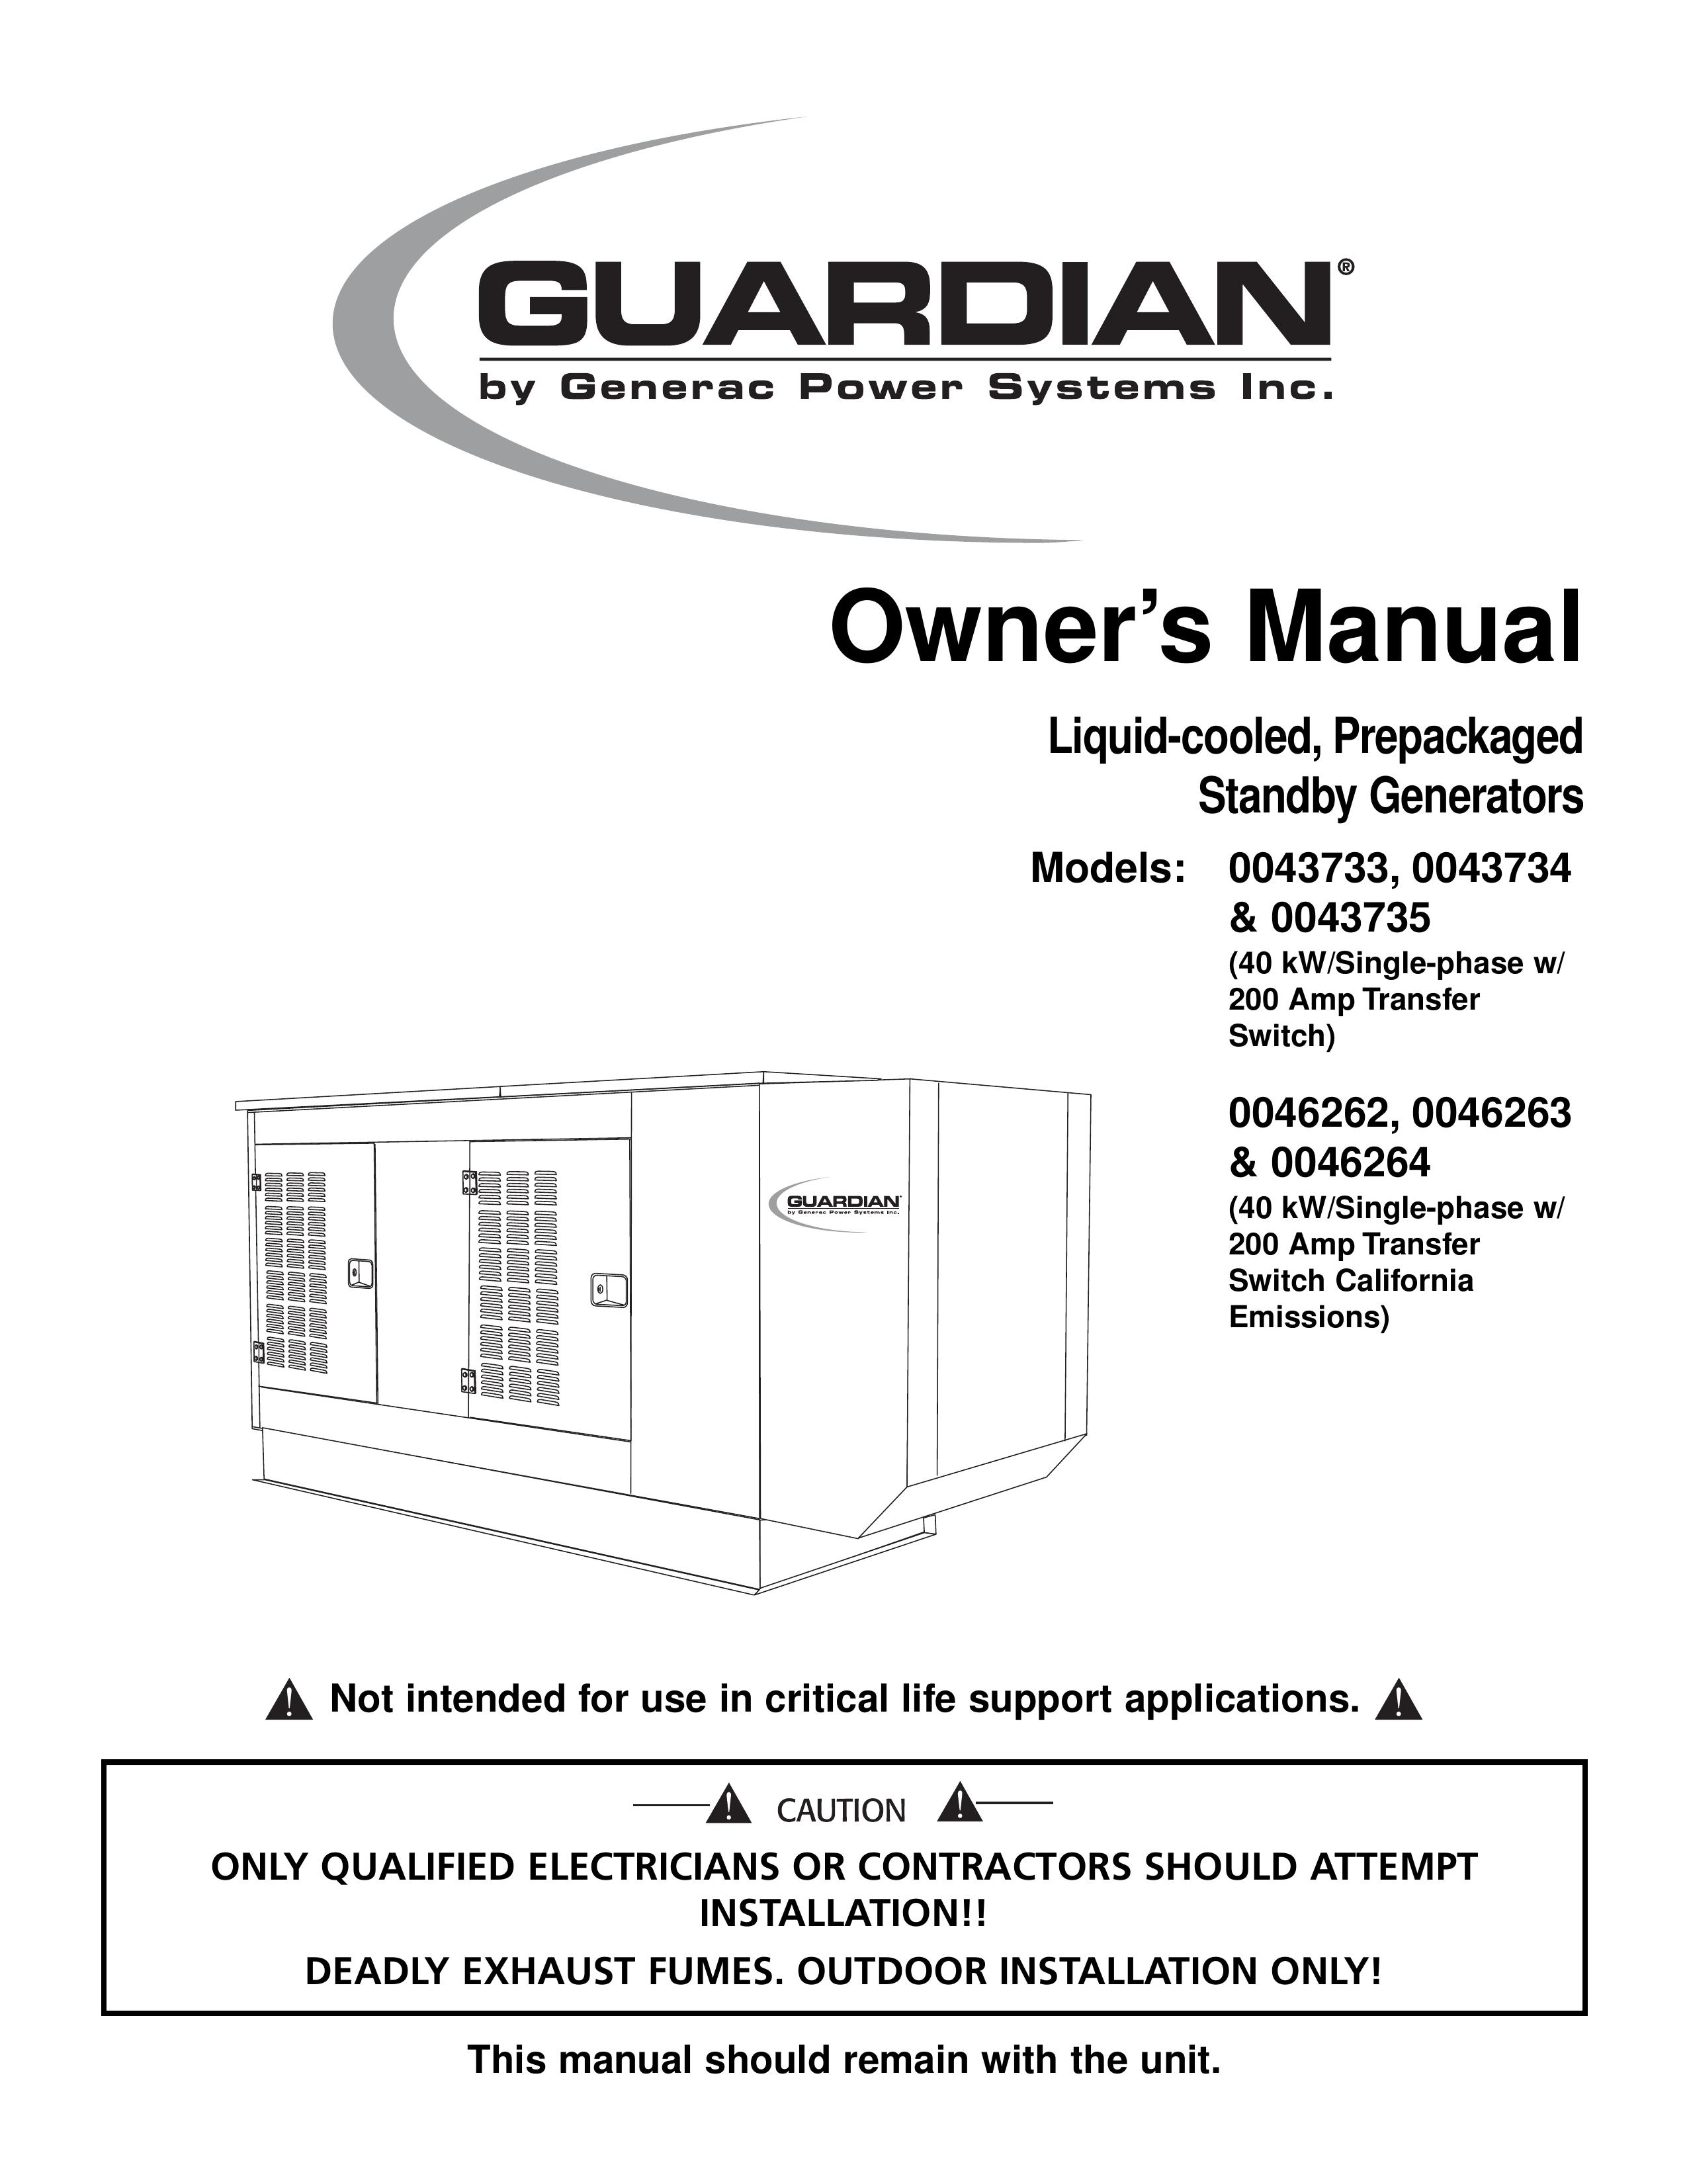 Generac Power Systems 0046264 Portable Generator User Manual